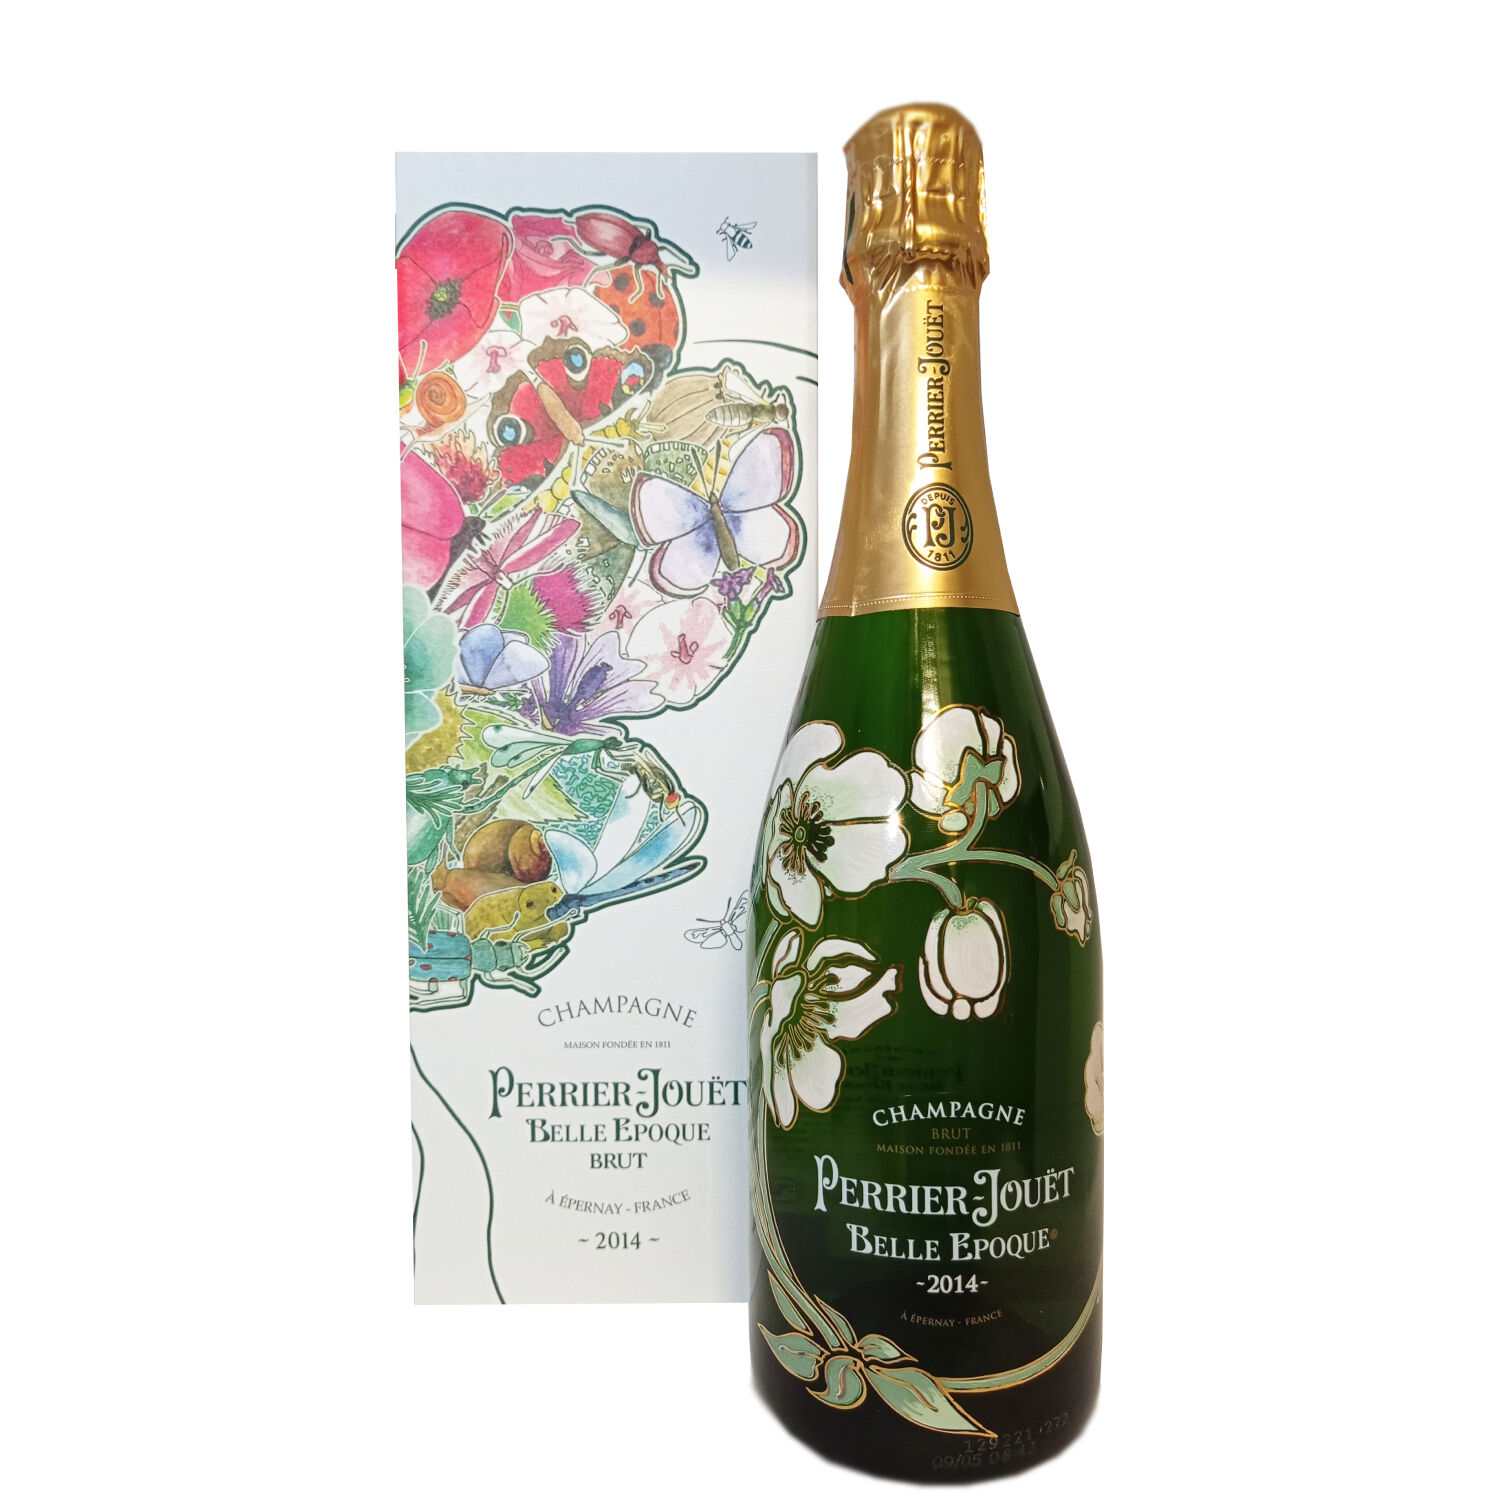 Laciviltadelbere Champagne Brut "Belle Epoque" (Astucciato) 2014 Perrier Jouet